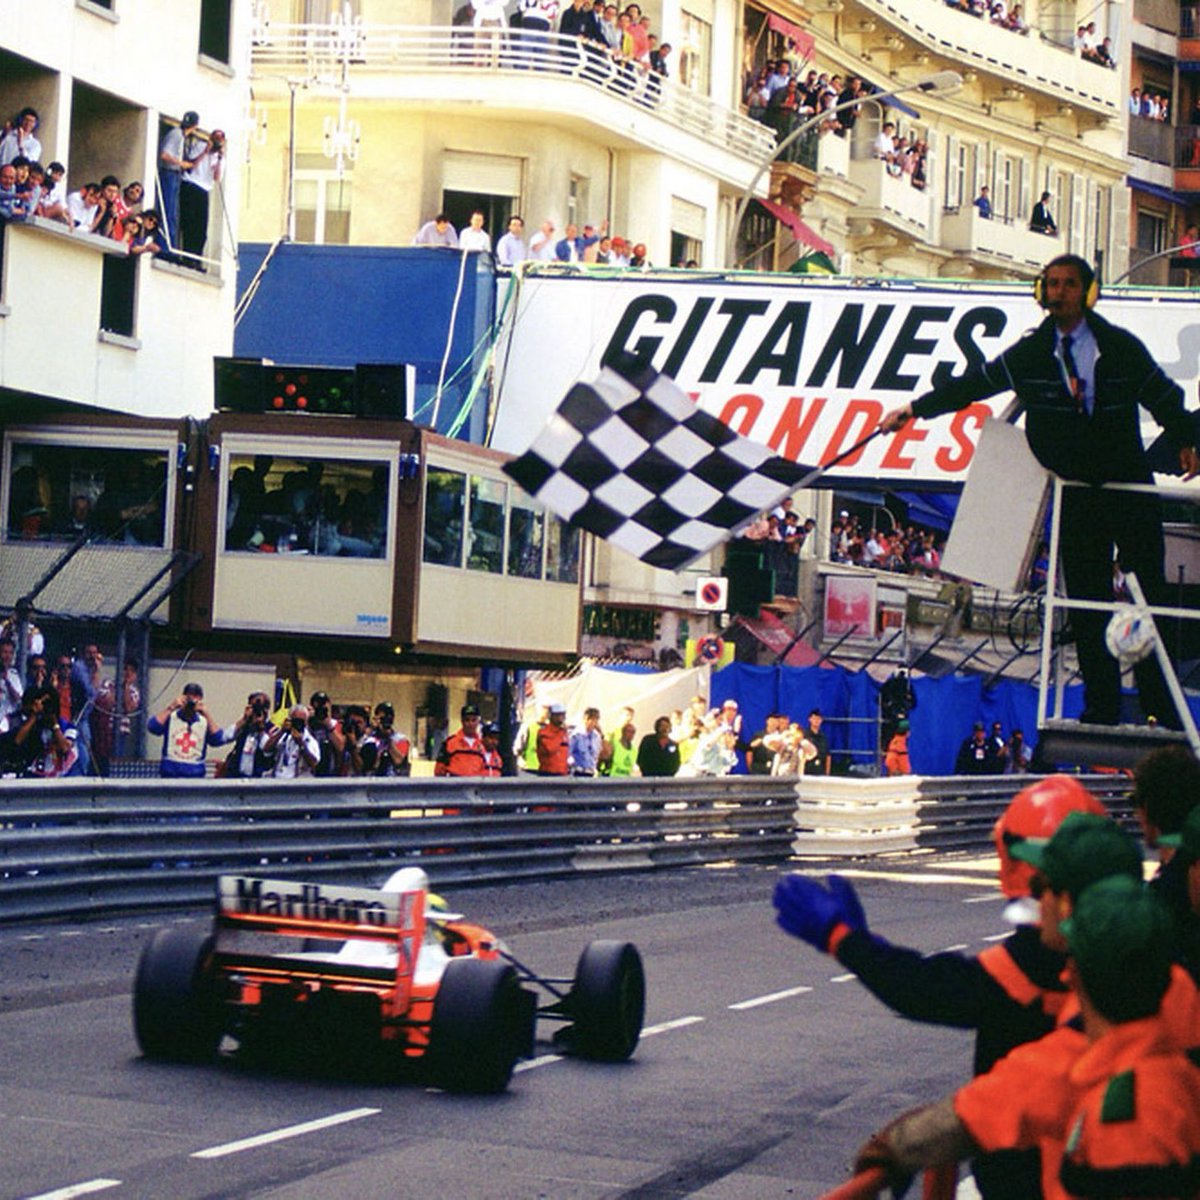 Ayrton Senna's 1993 Monaco Grand Prix winner car, the McLaren MP4-8. This car is now owned by Sebastian Vettel. #F1 #McLaren #MonacoGP